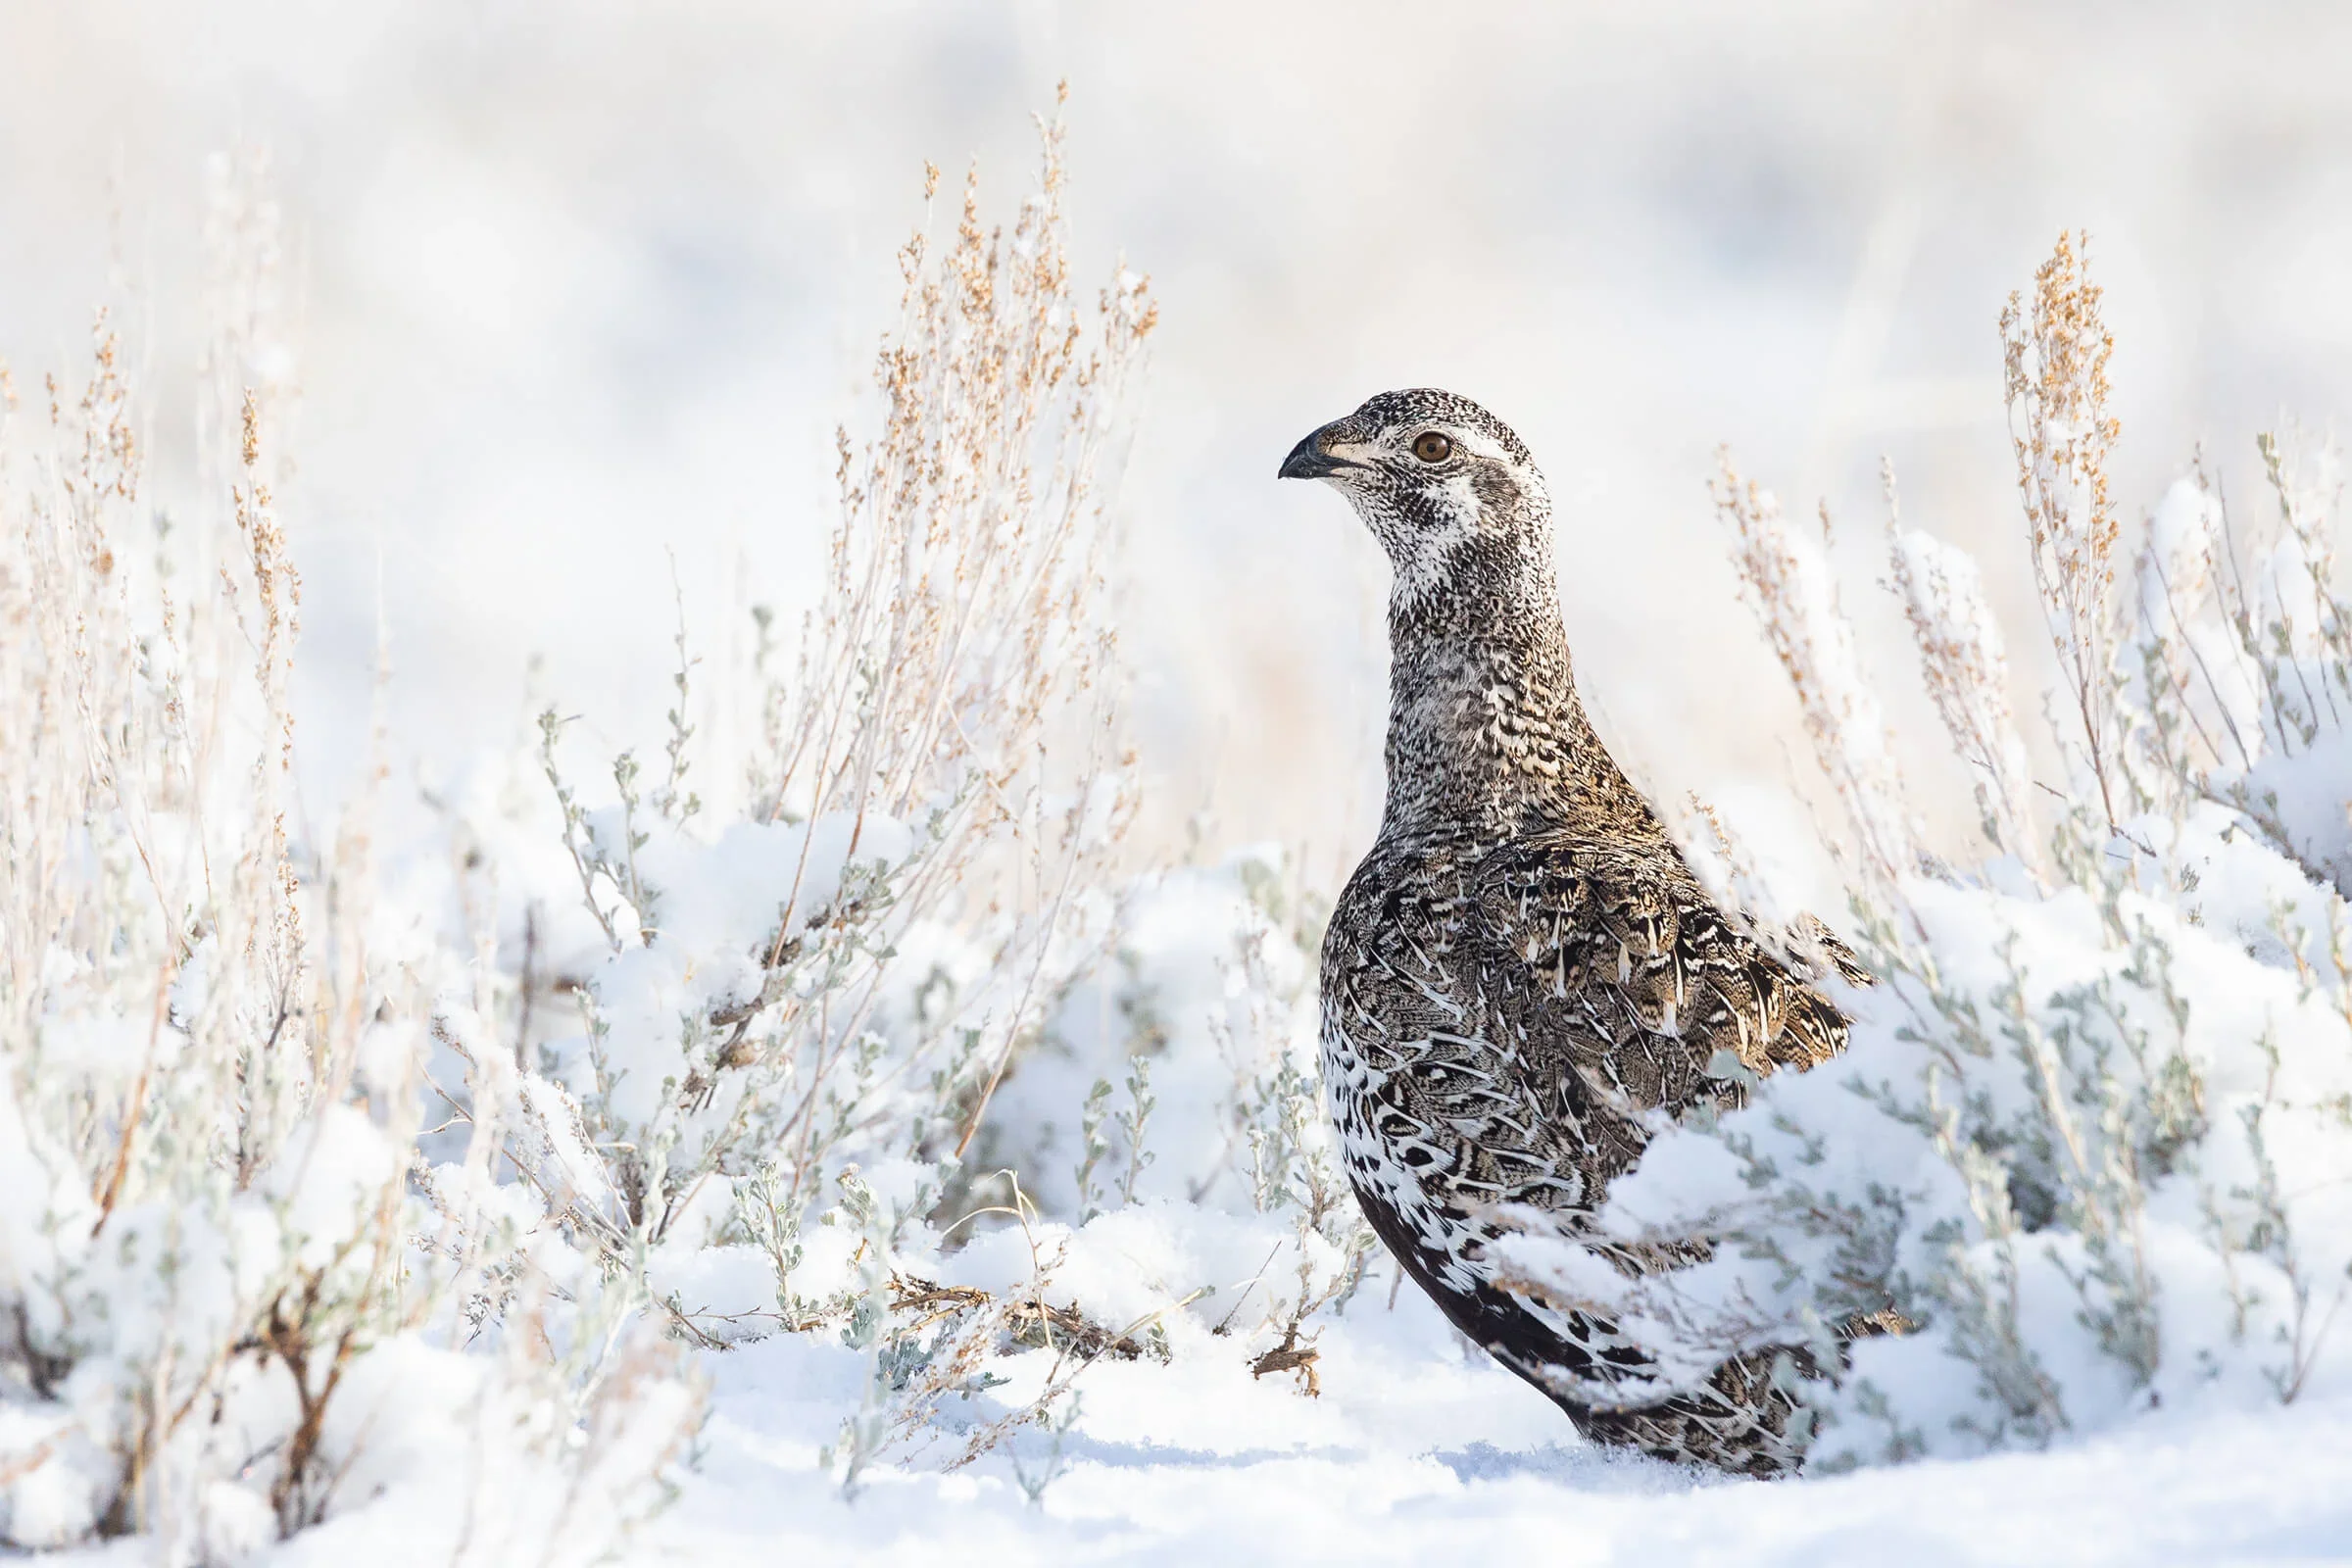 The year’s best bird photos highlight the humor, beauty, and fragility of avian life